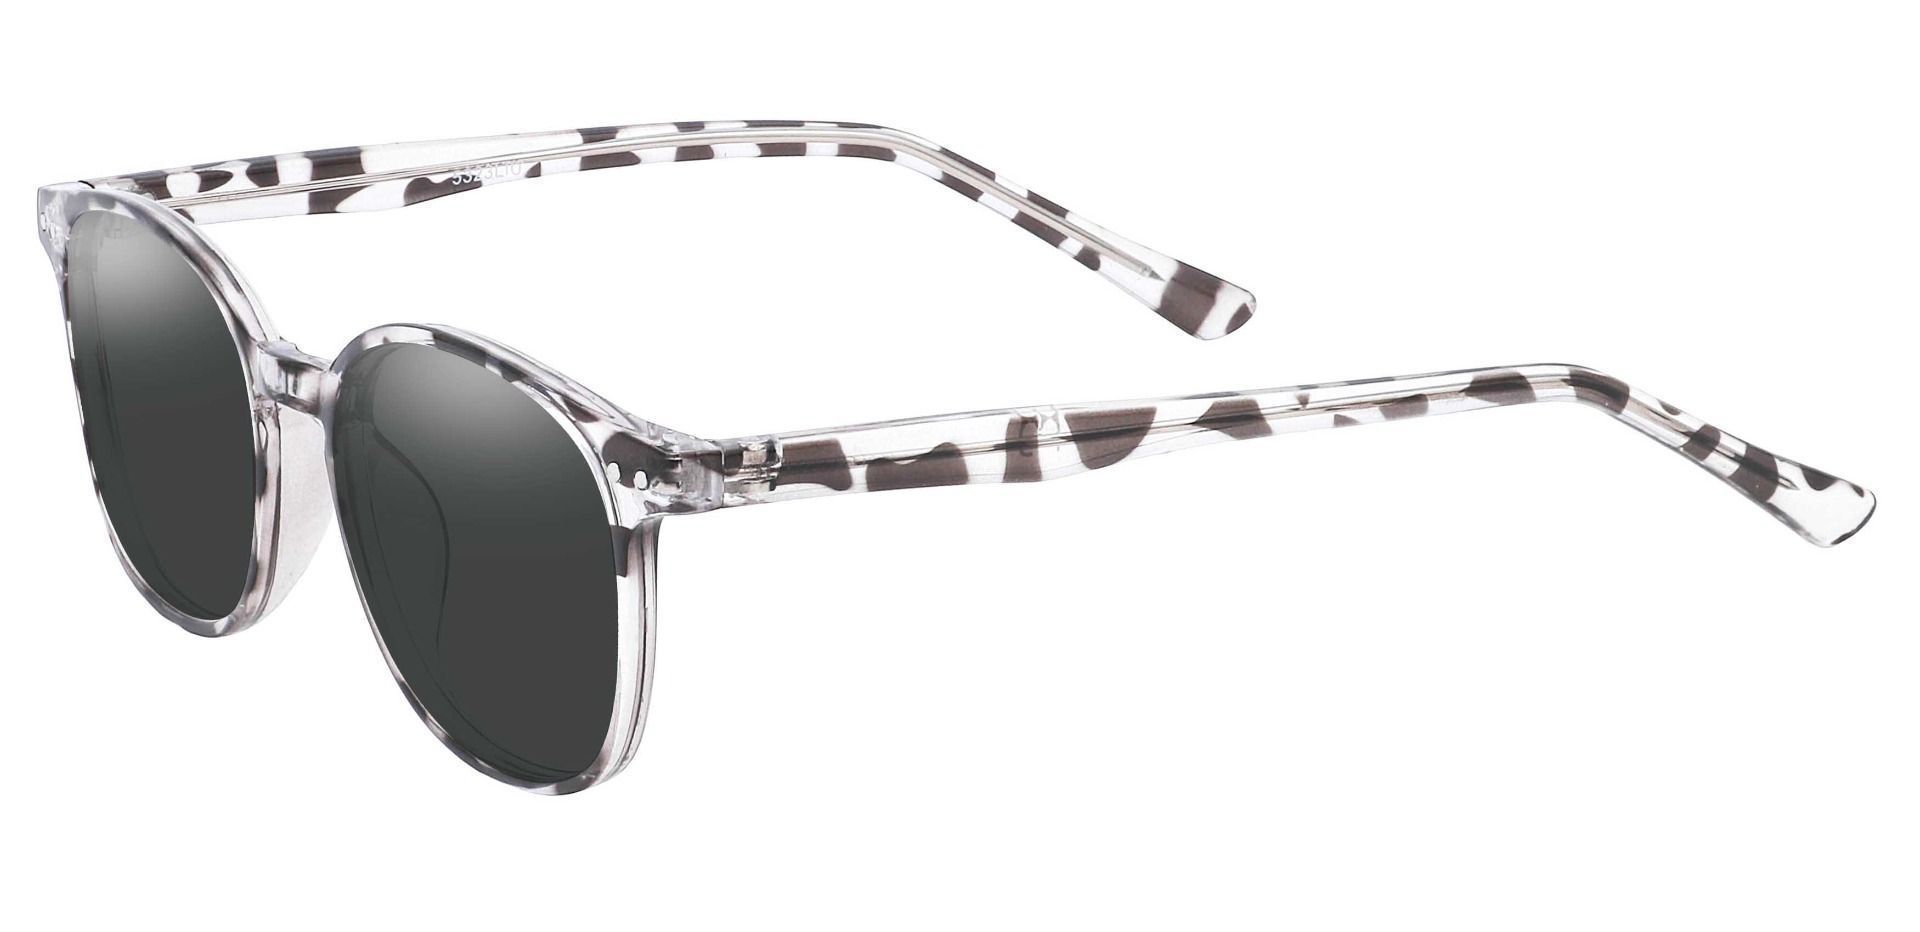 Holstein Oval Prescription Sunglasses - Leopard Frame With Gray Lenses